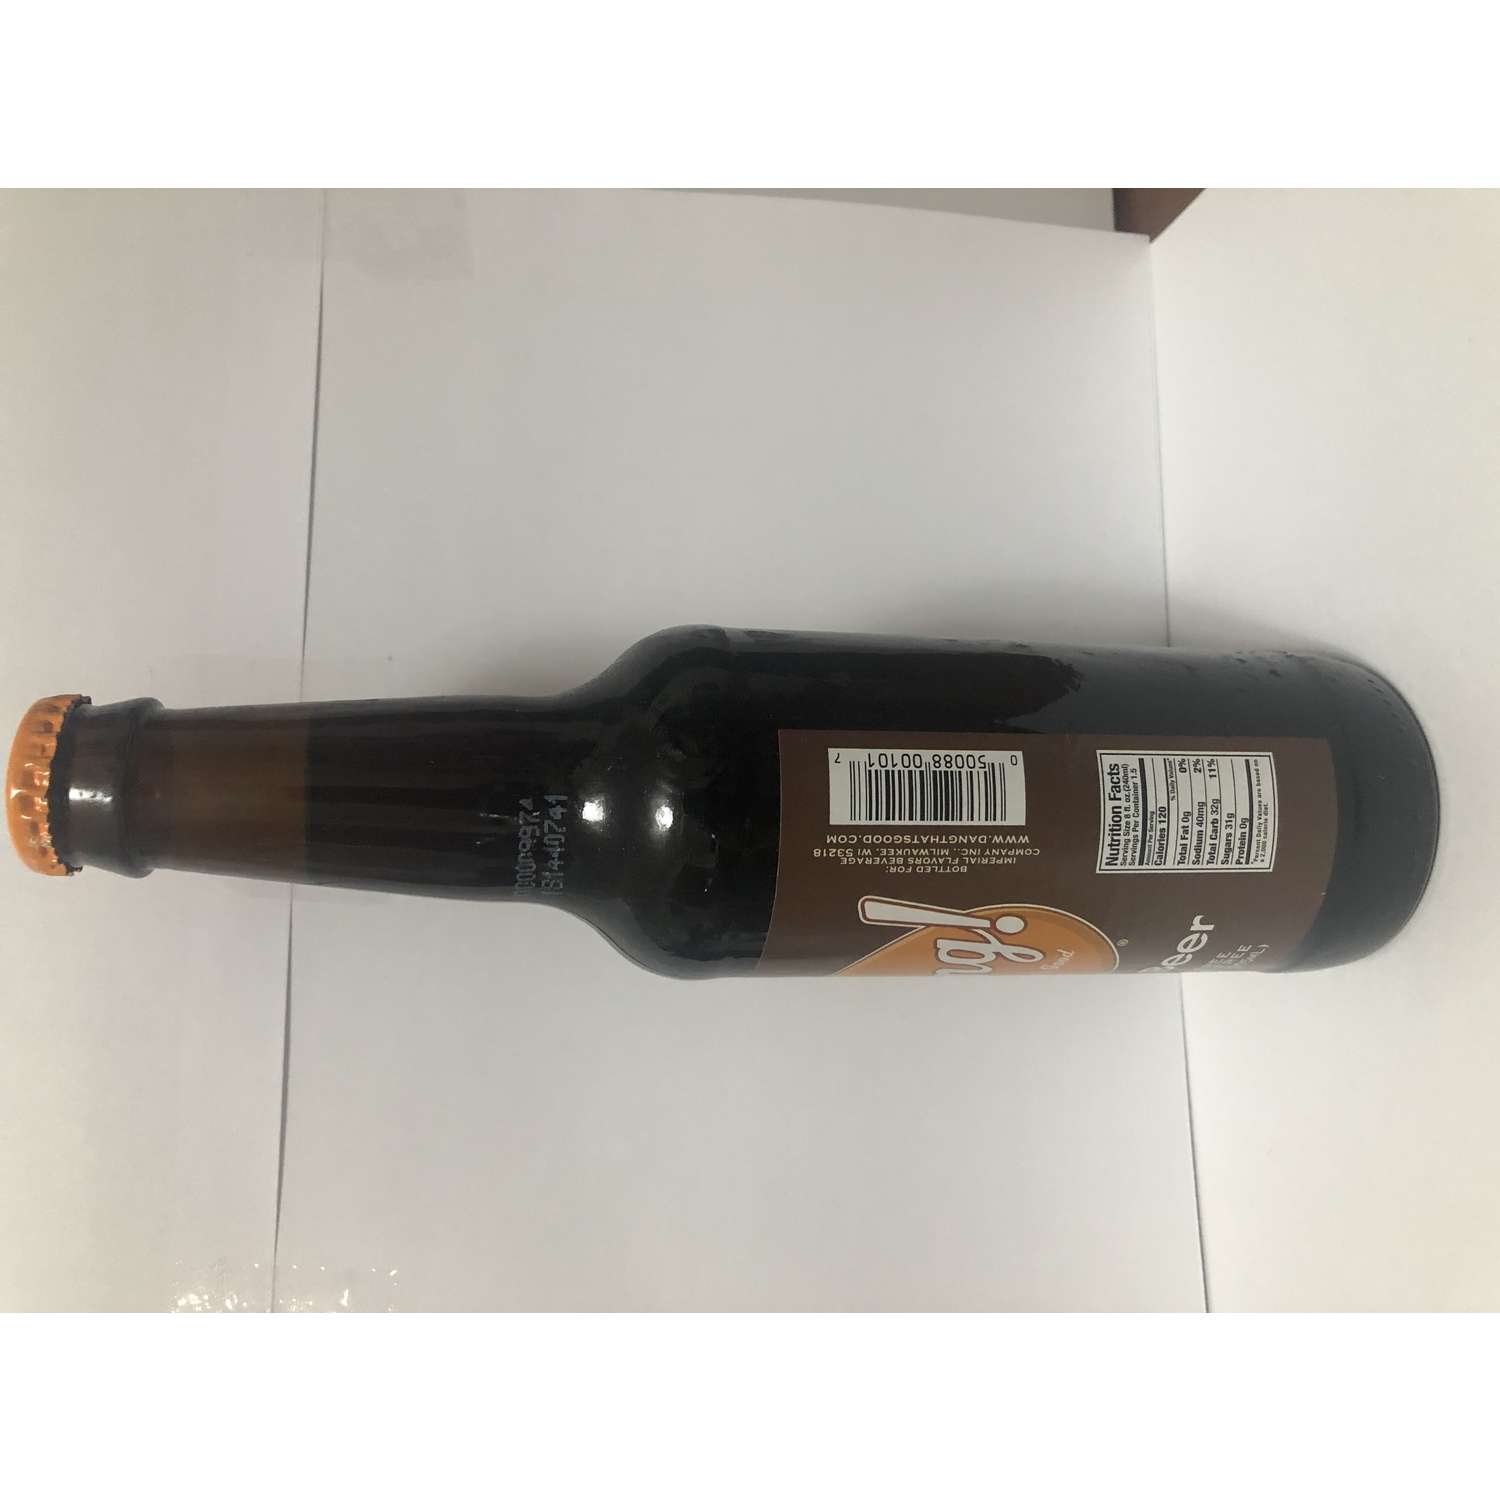 Wooden Bottle Opener Beer Can Opener Household Kitchen Bar Tools For Home  Handle Handheld Wine Soda Glass Cap (1pc)